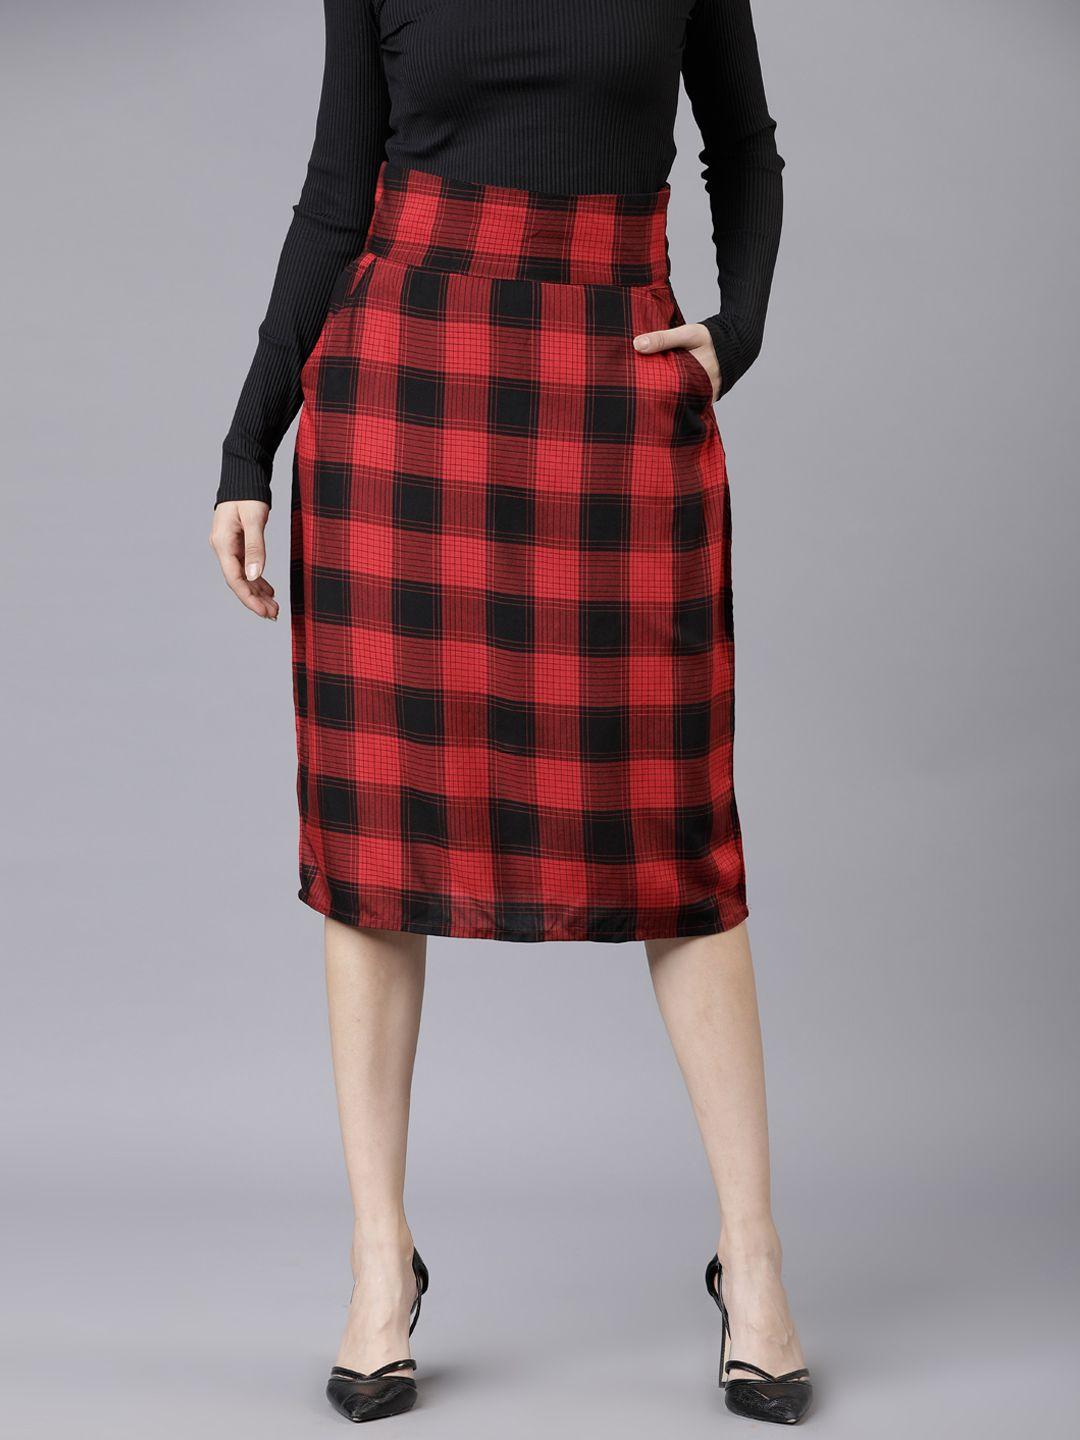 tokyo-talkies-women-red-&-black-checked-straight-skirt